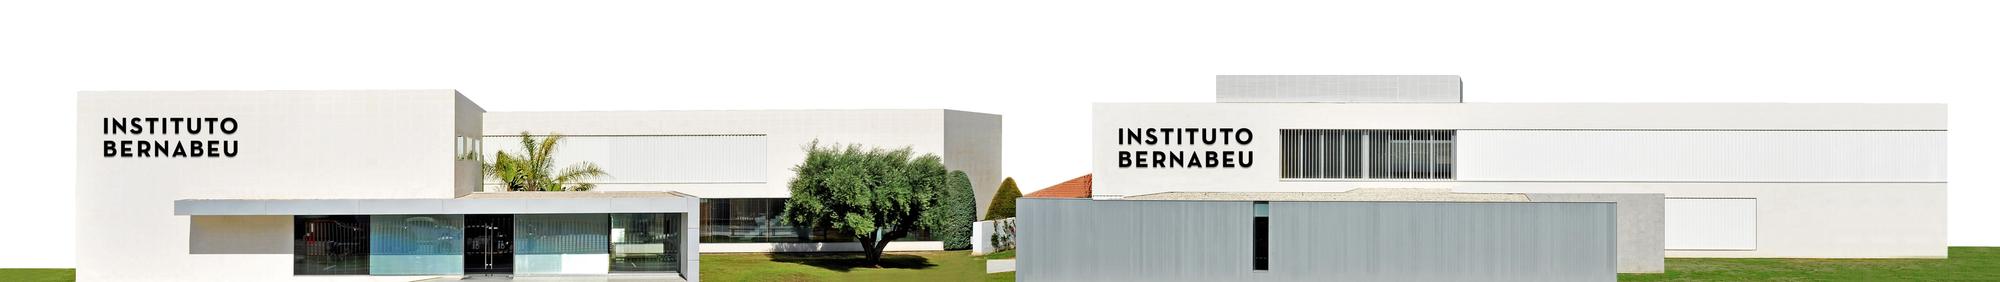 Instituto Bernabeu de Alicante